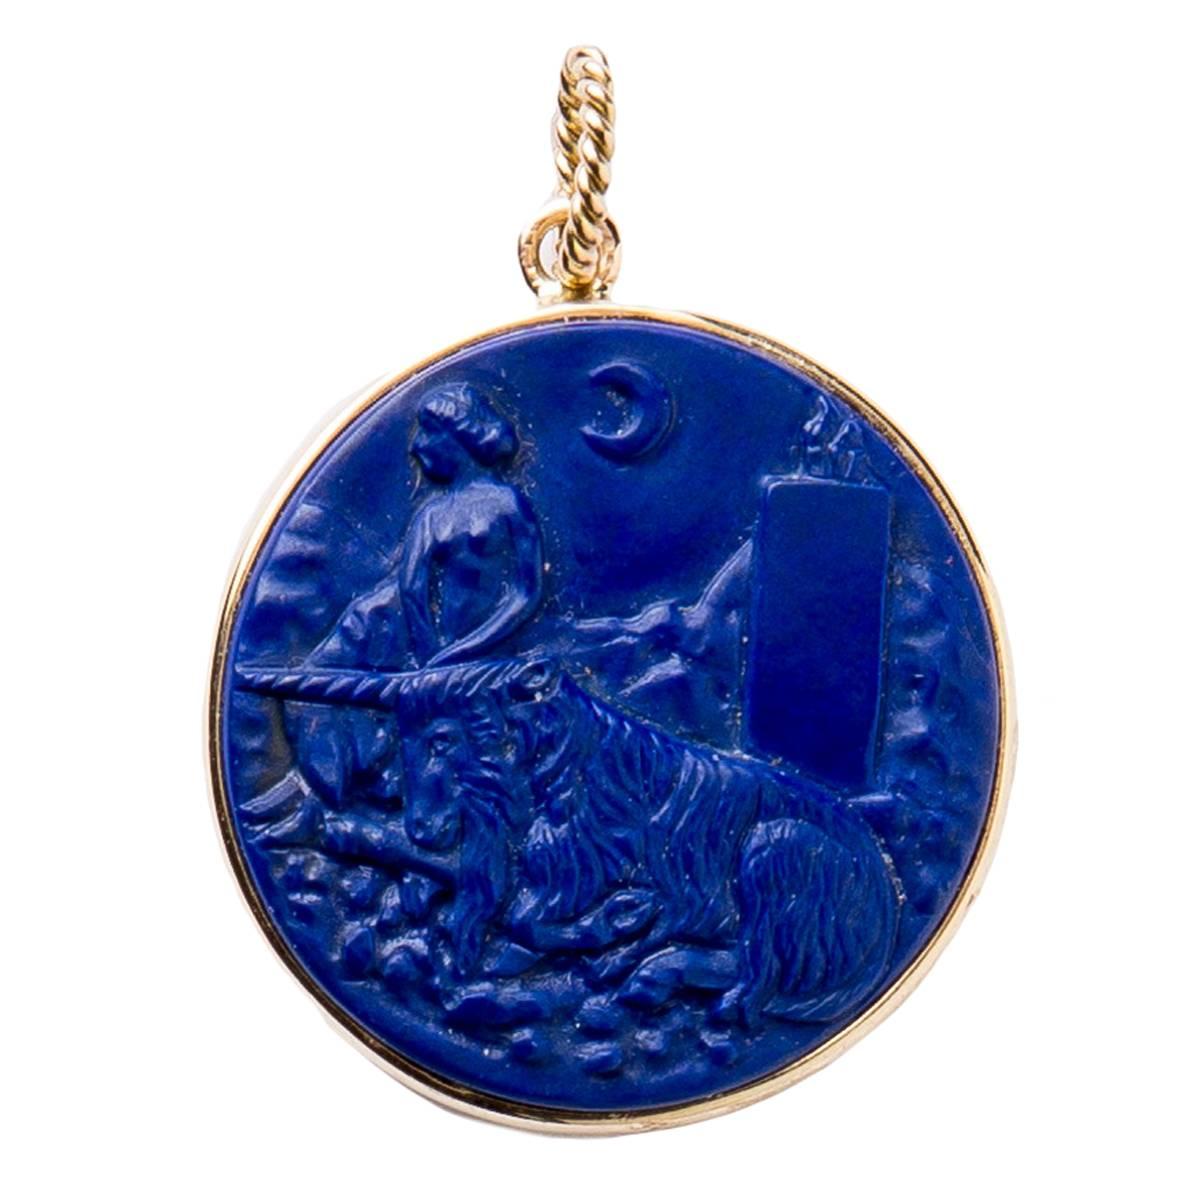 Renaissance Lapis Lazuli Gold Pendant of Innocence and Unicorn